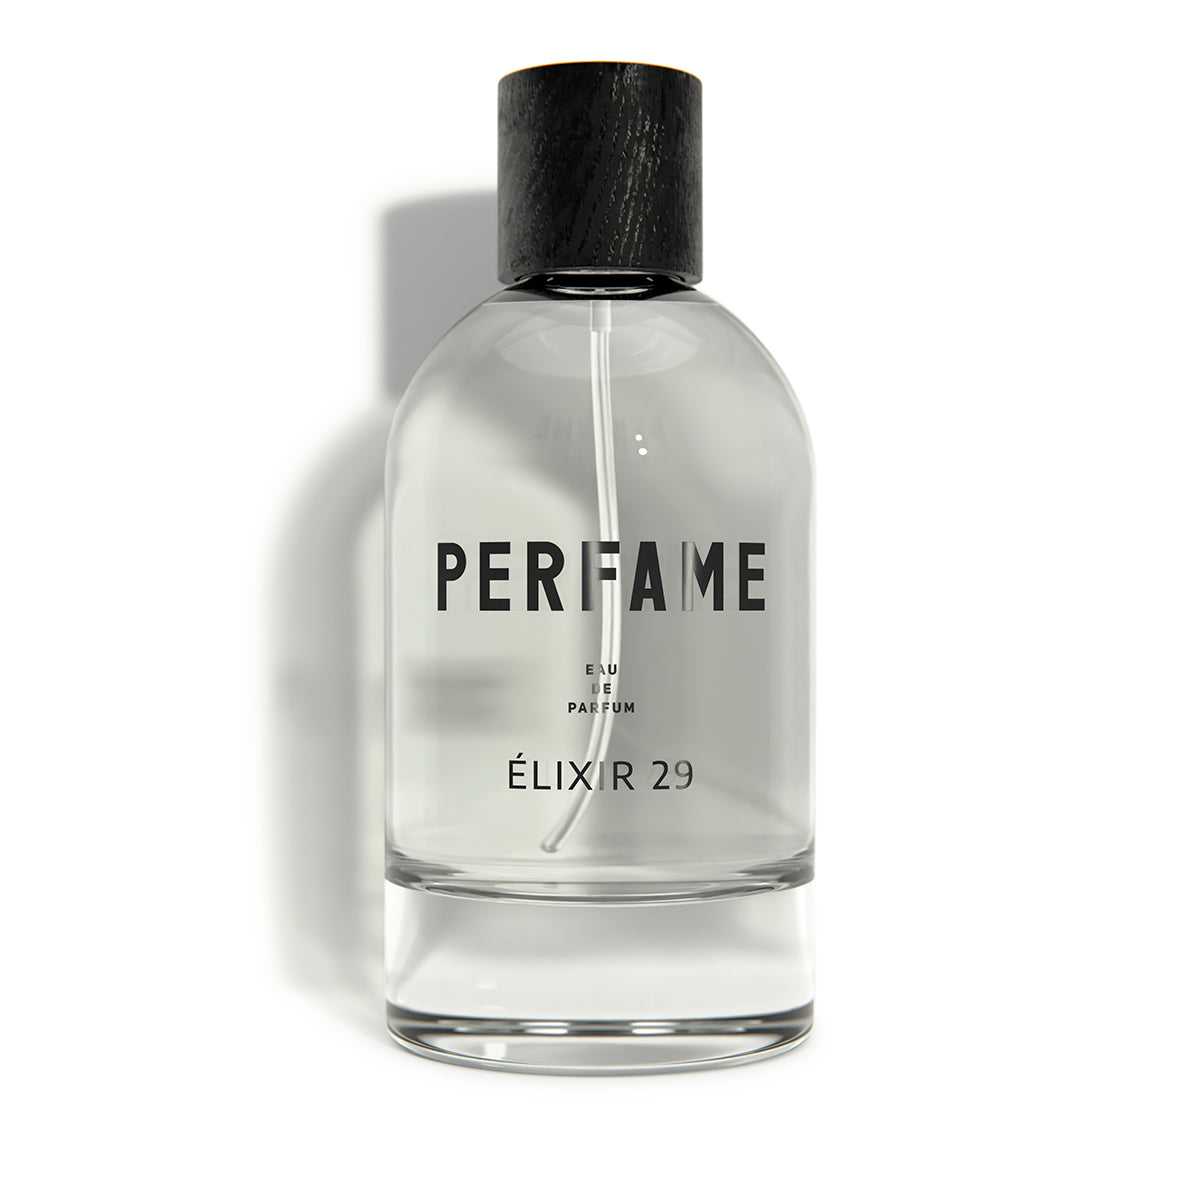 Le Mâle Elixir”: A More Concentrated Version of the Popular “Le Mâle”  Fragrance